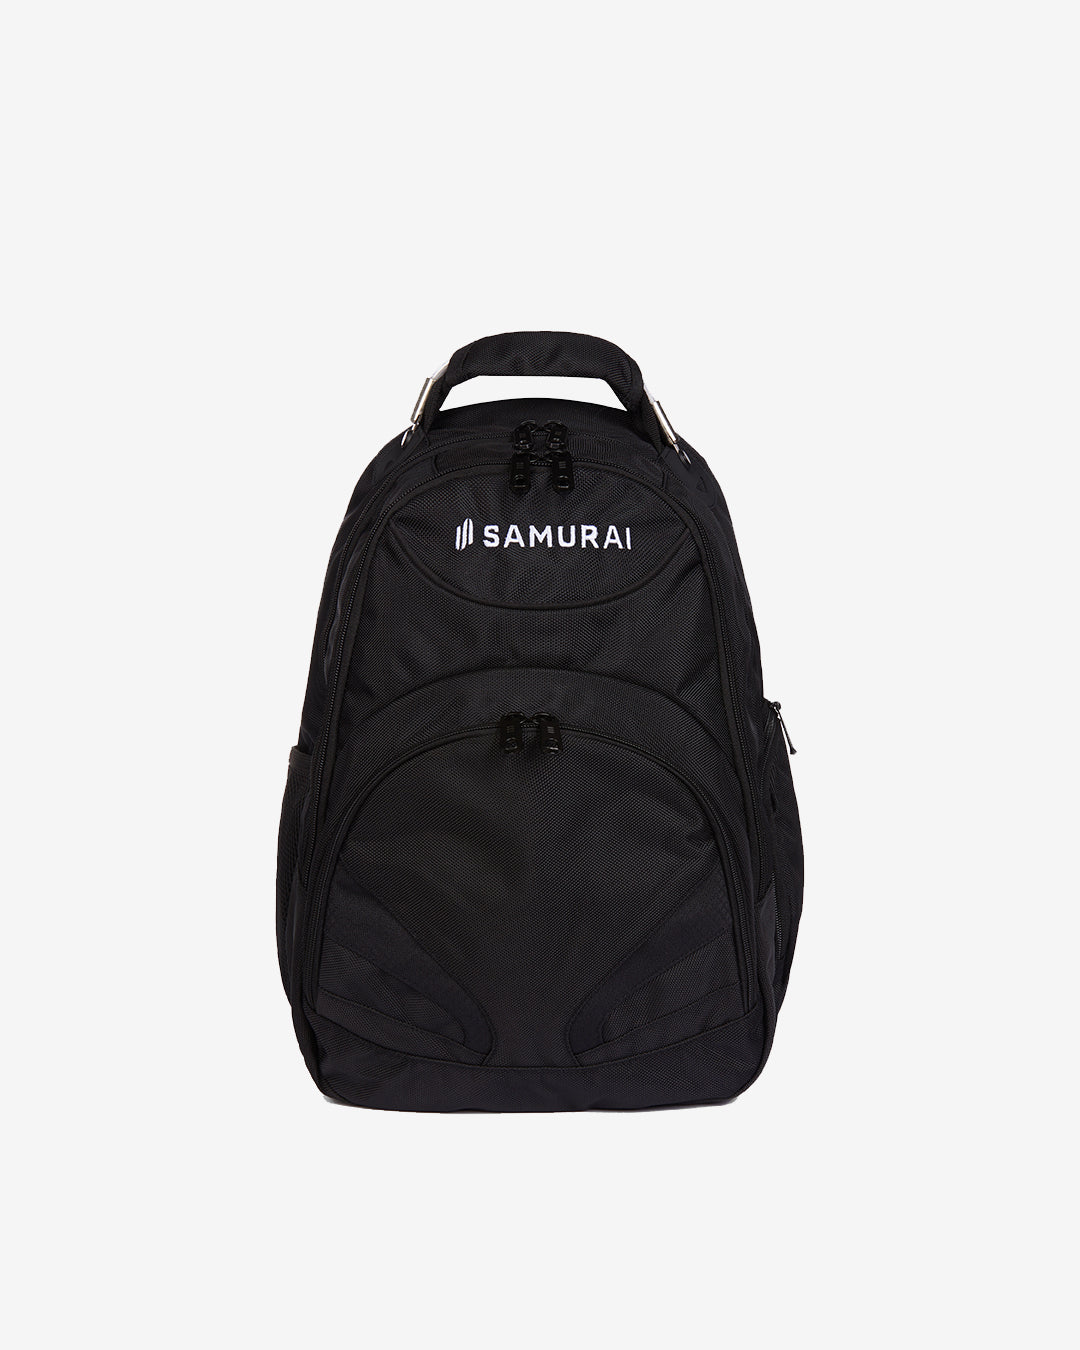 U:0213 - Backpack 33L - Black